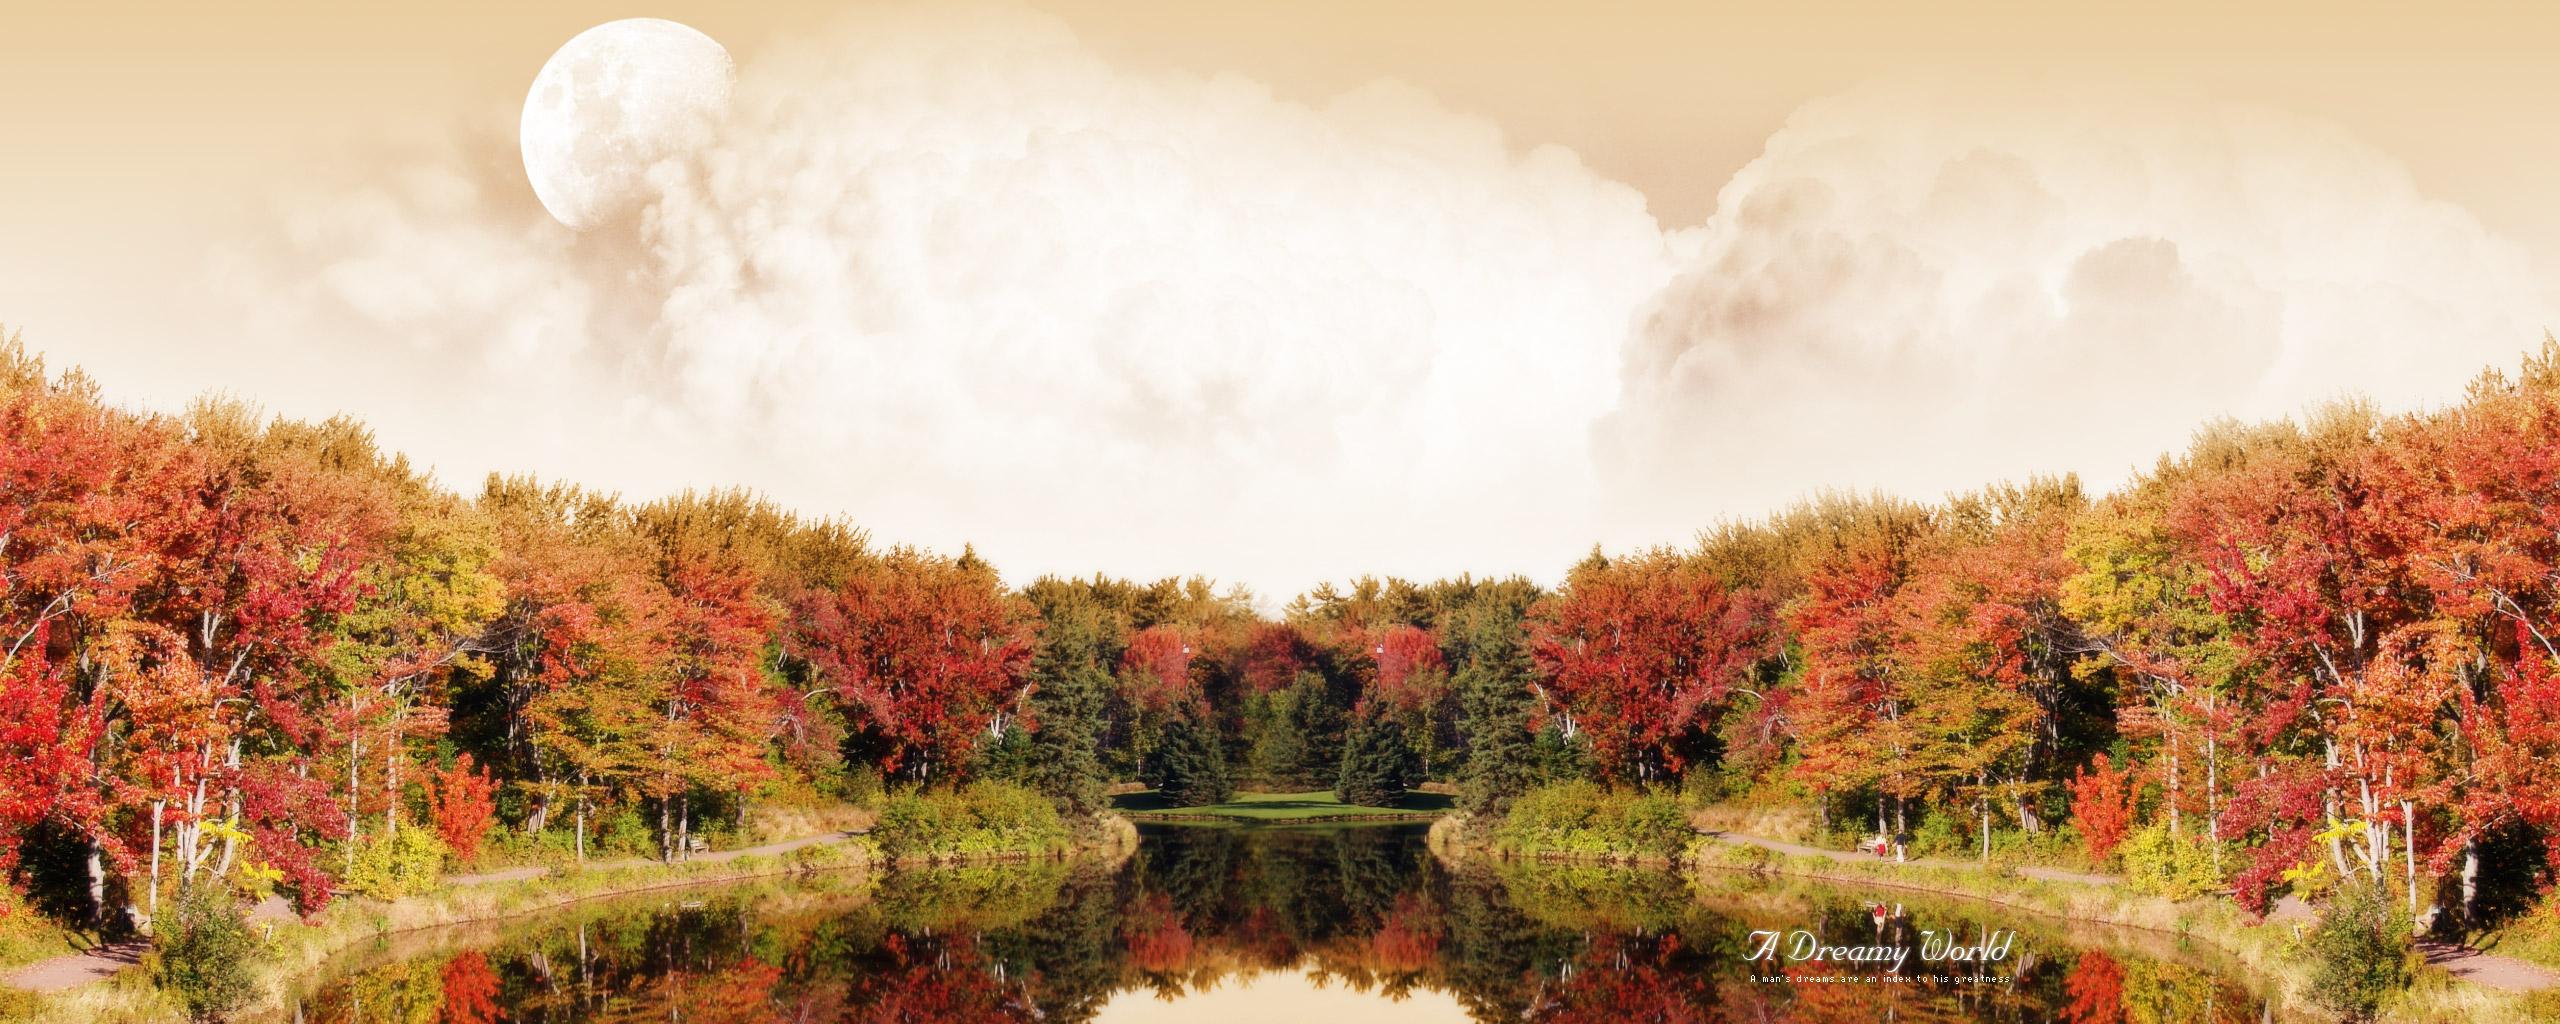 Autumn Dual Screen Wallpaper